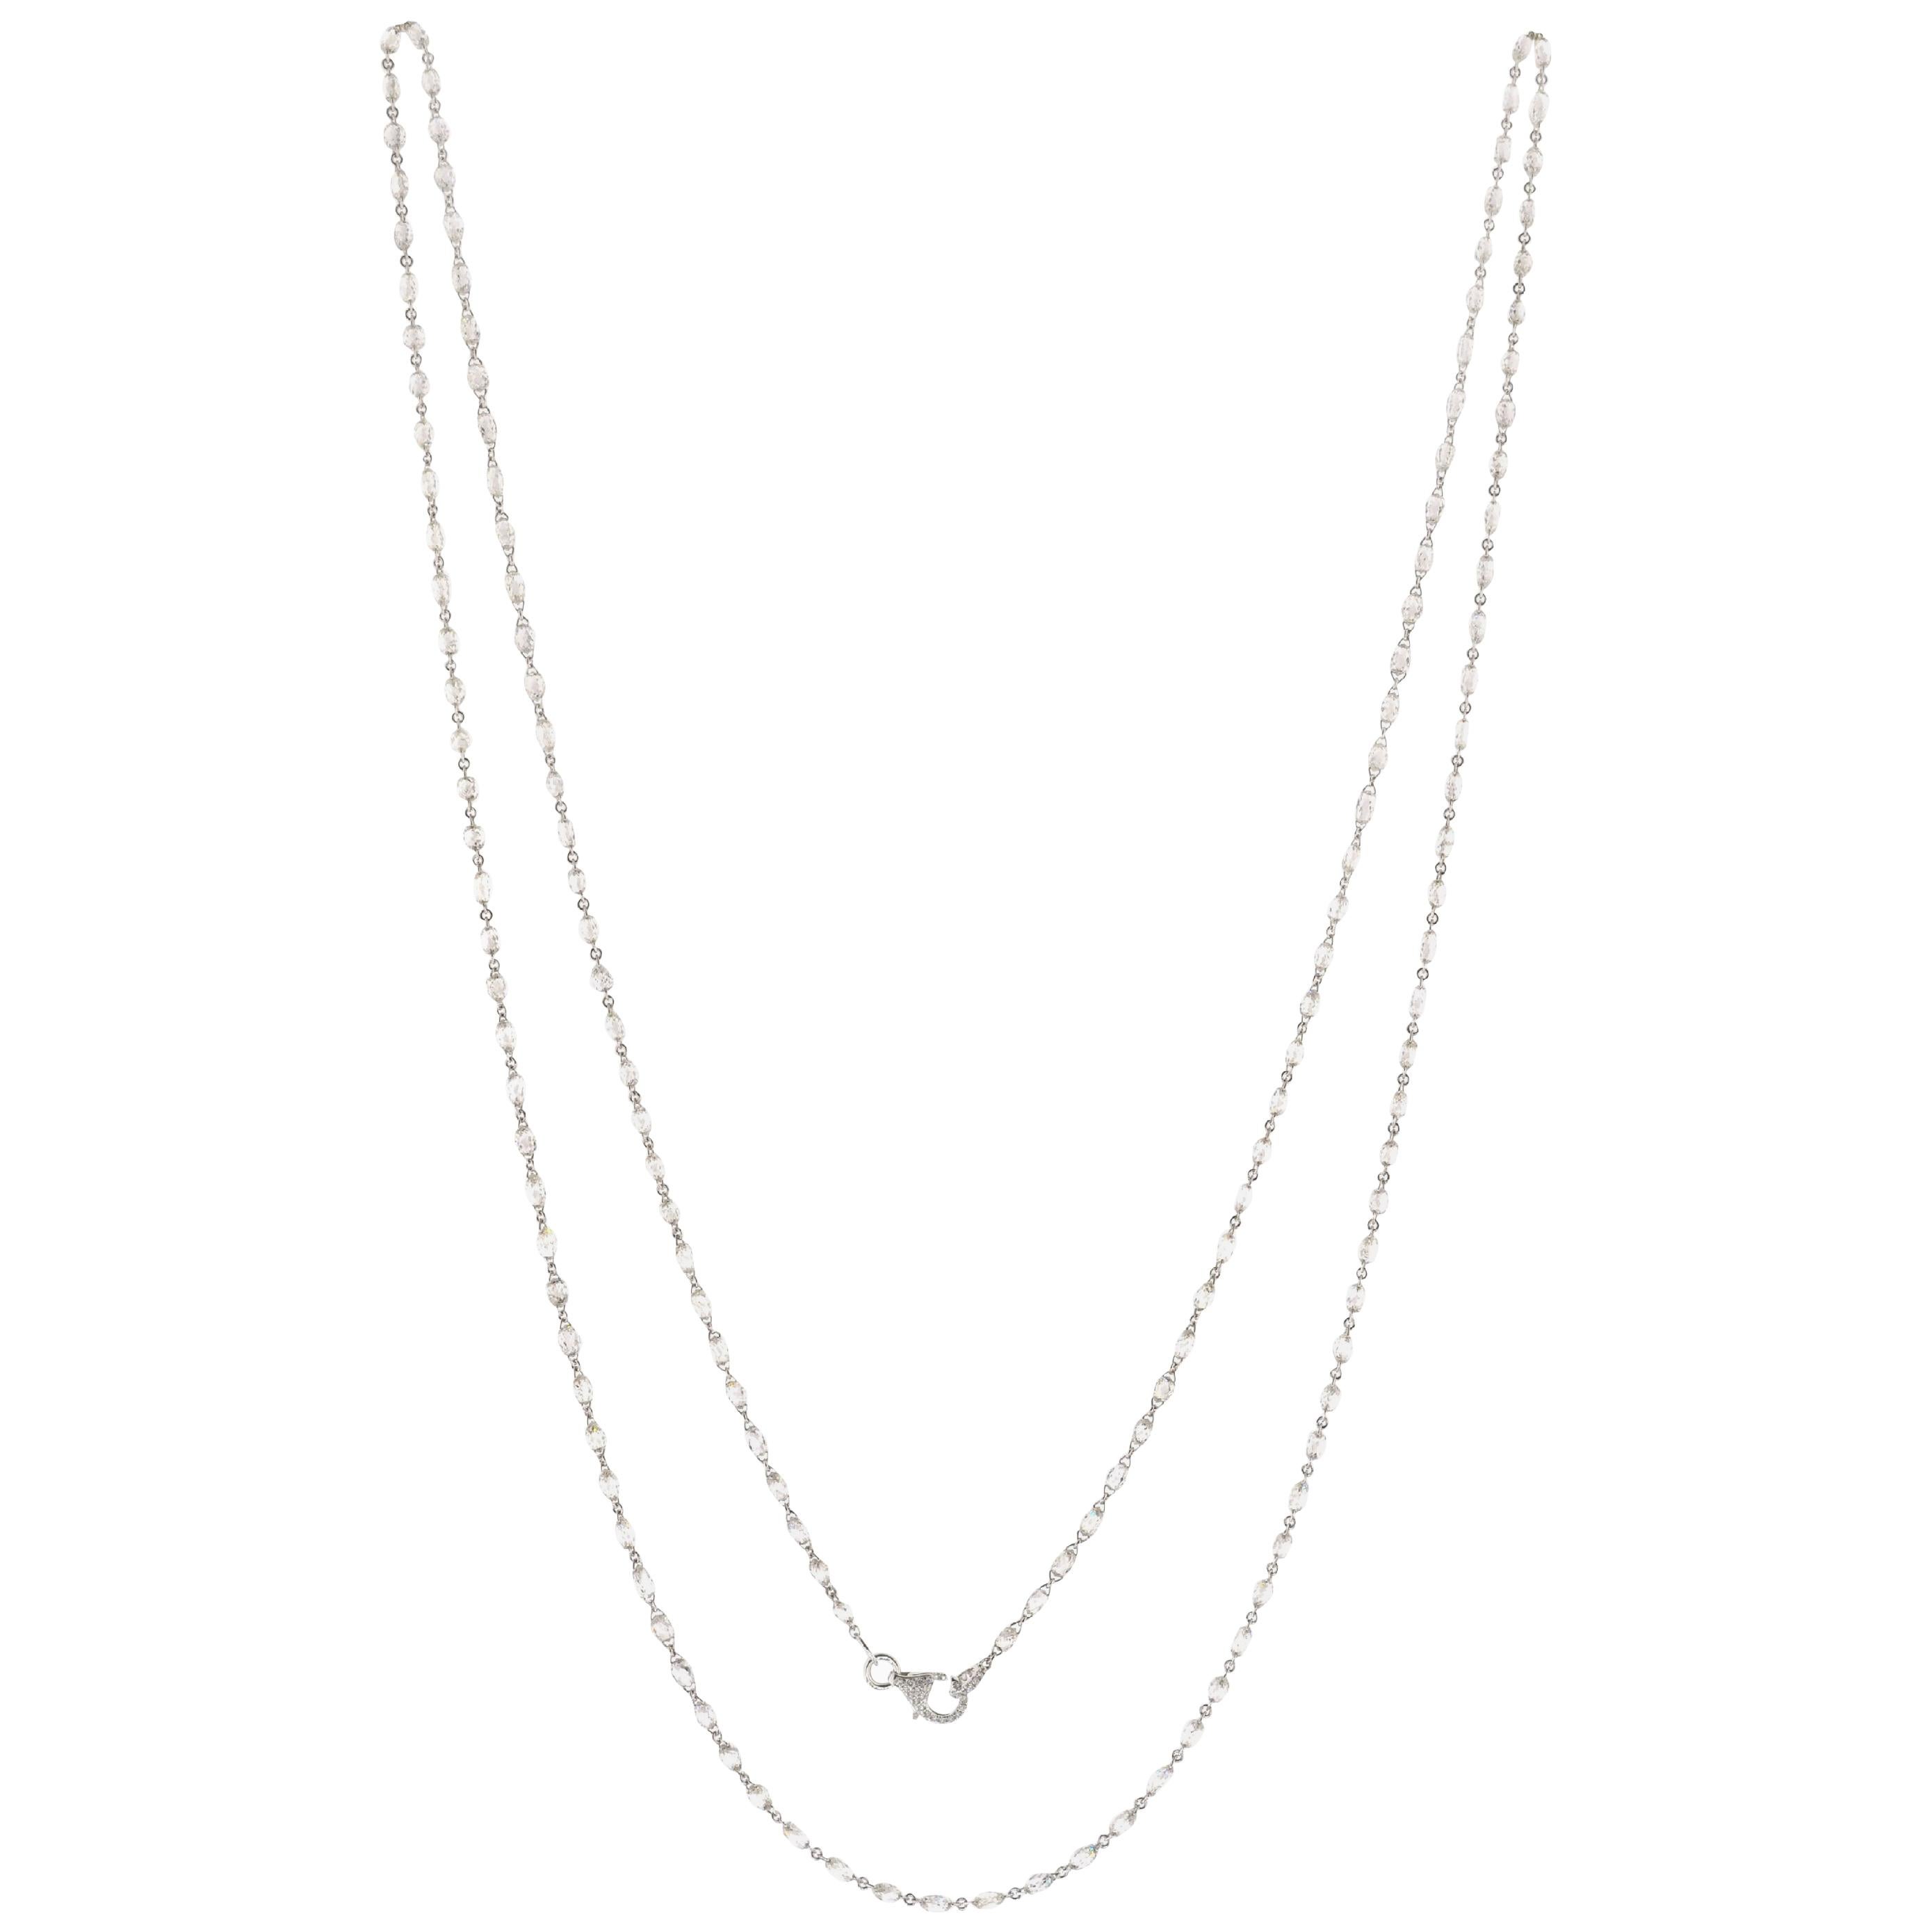 JR 27.51 Carat White Diamond Briolette Necklace 18 Karat White Gold For Sale